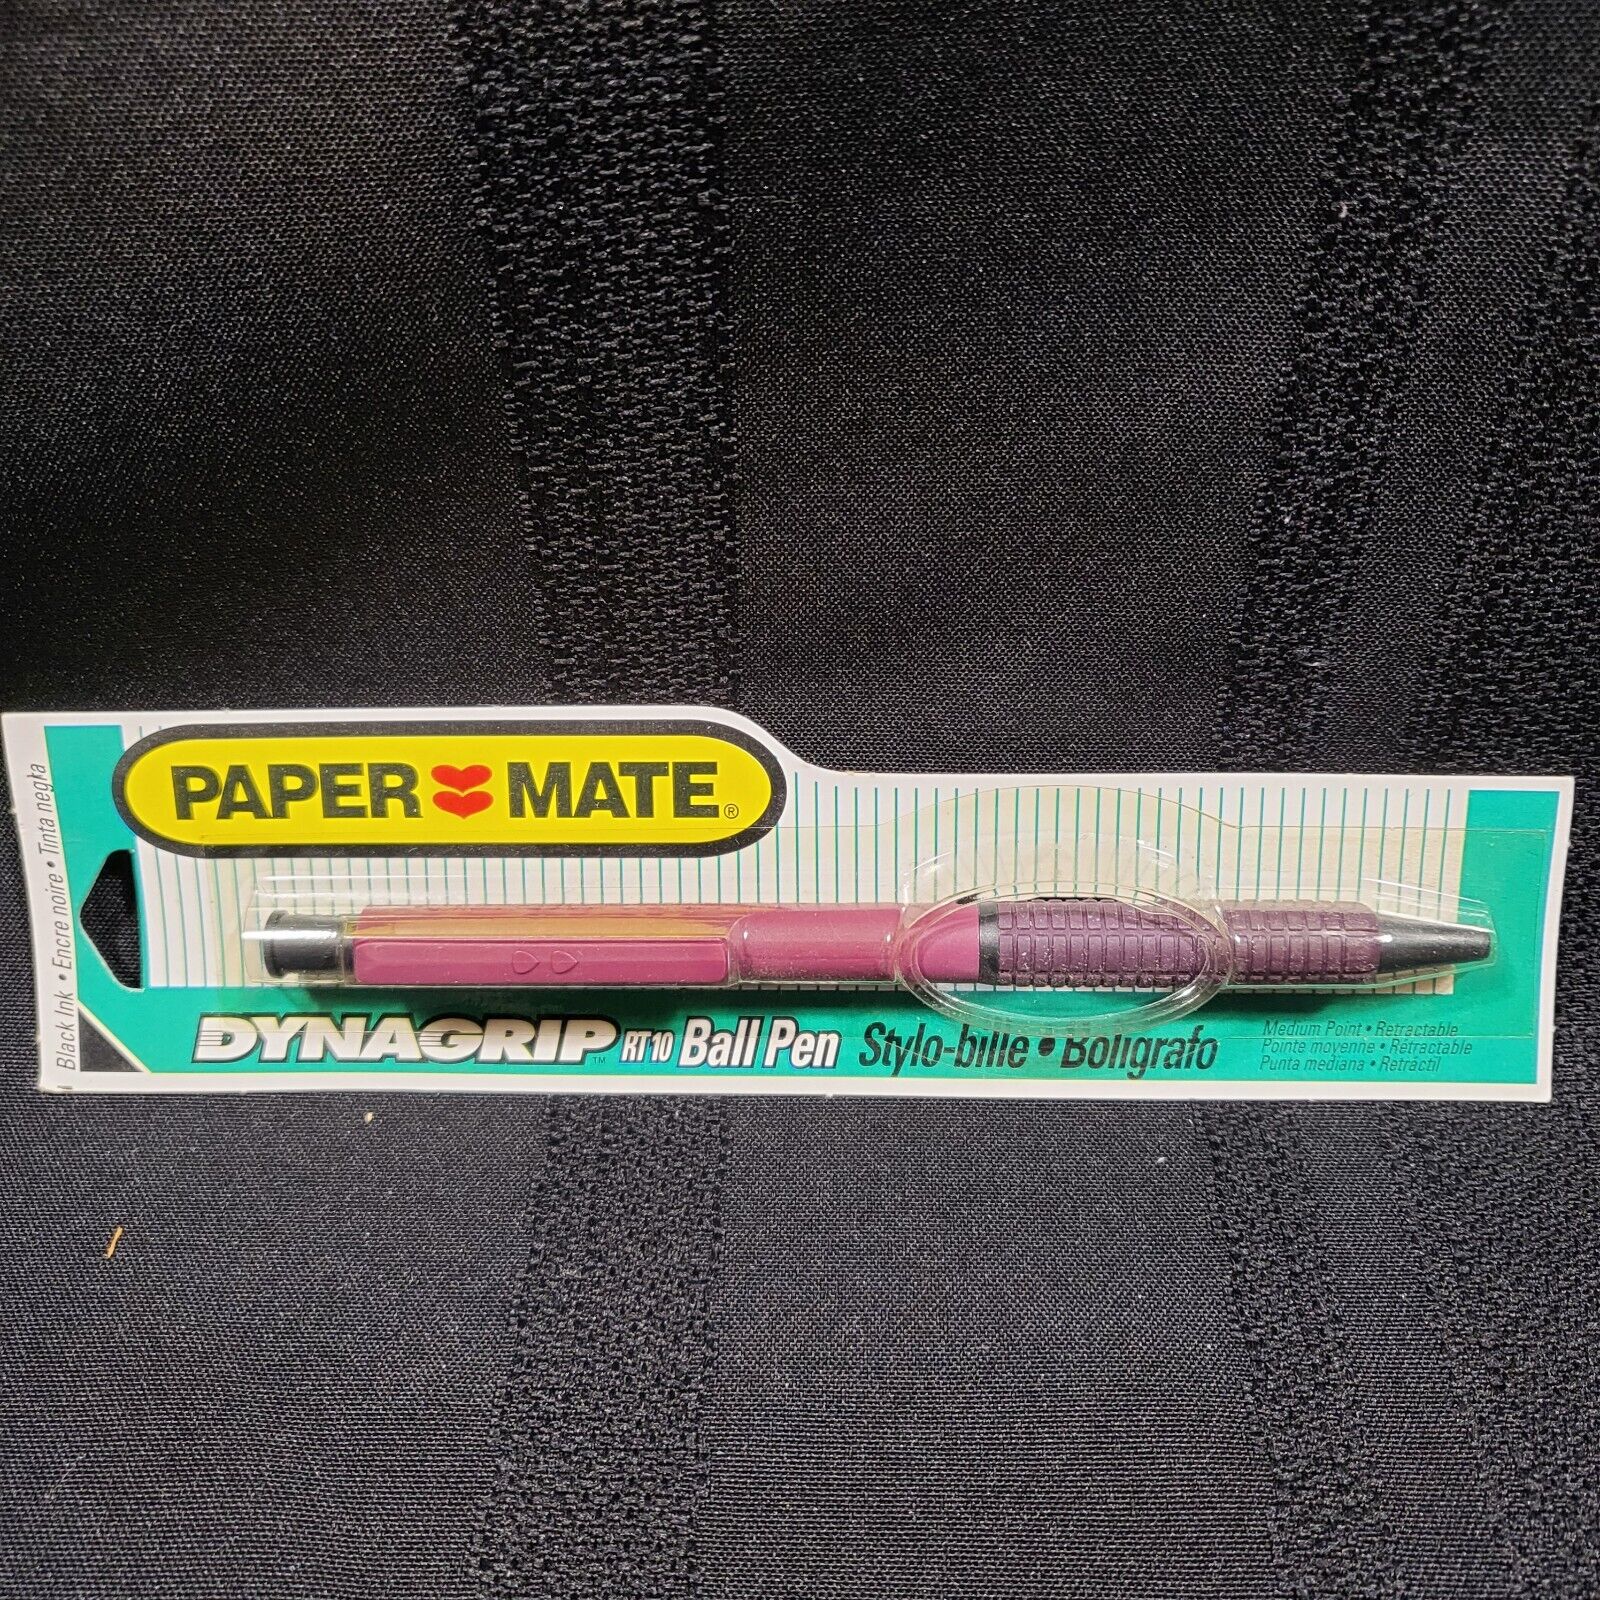 Paper Mate Dynagrip Rt 10 Ball Pen Stylo-bille Black Ink Medium Point Vintage